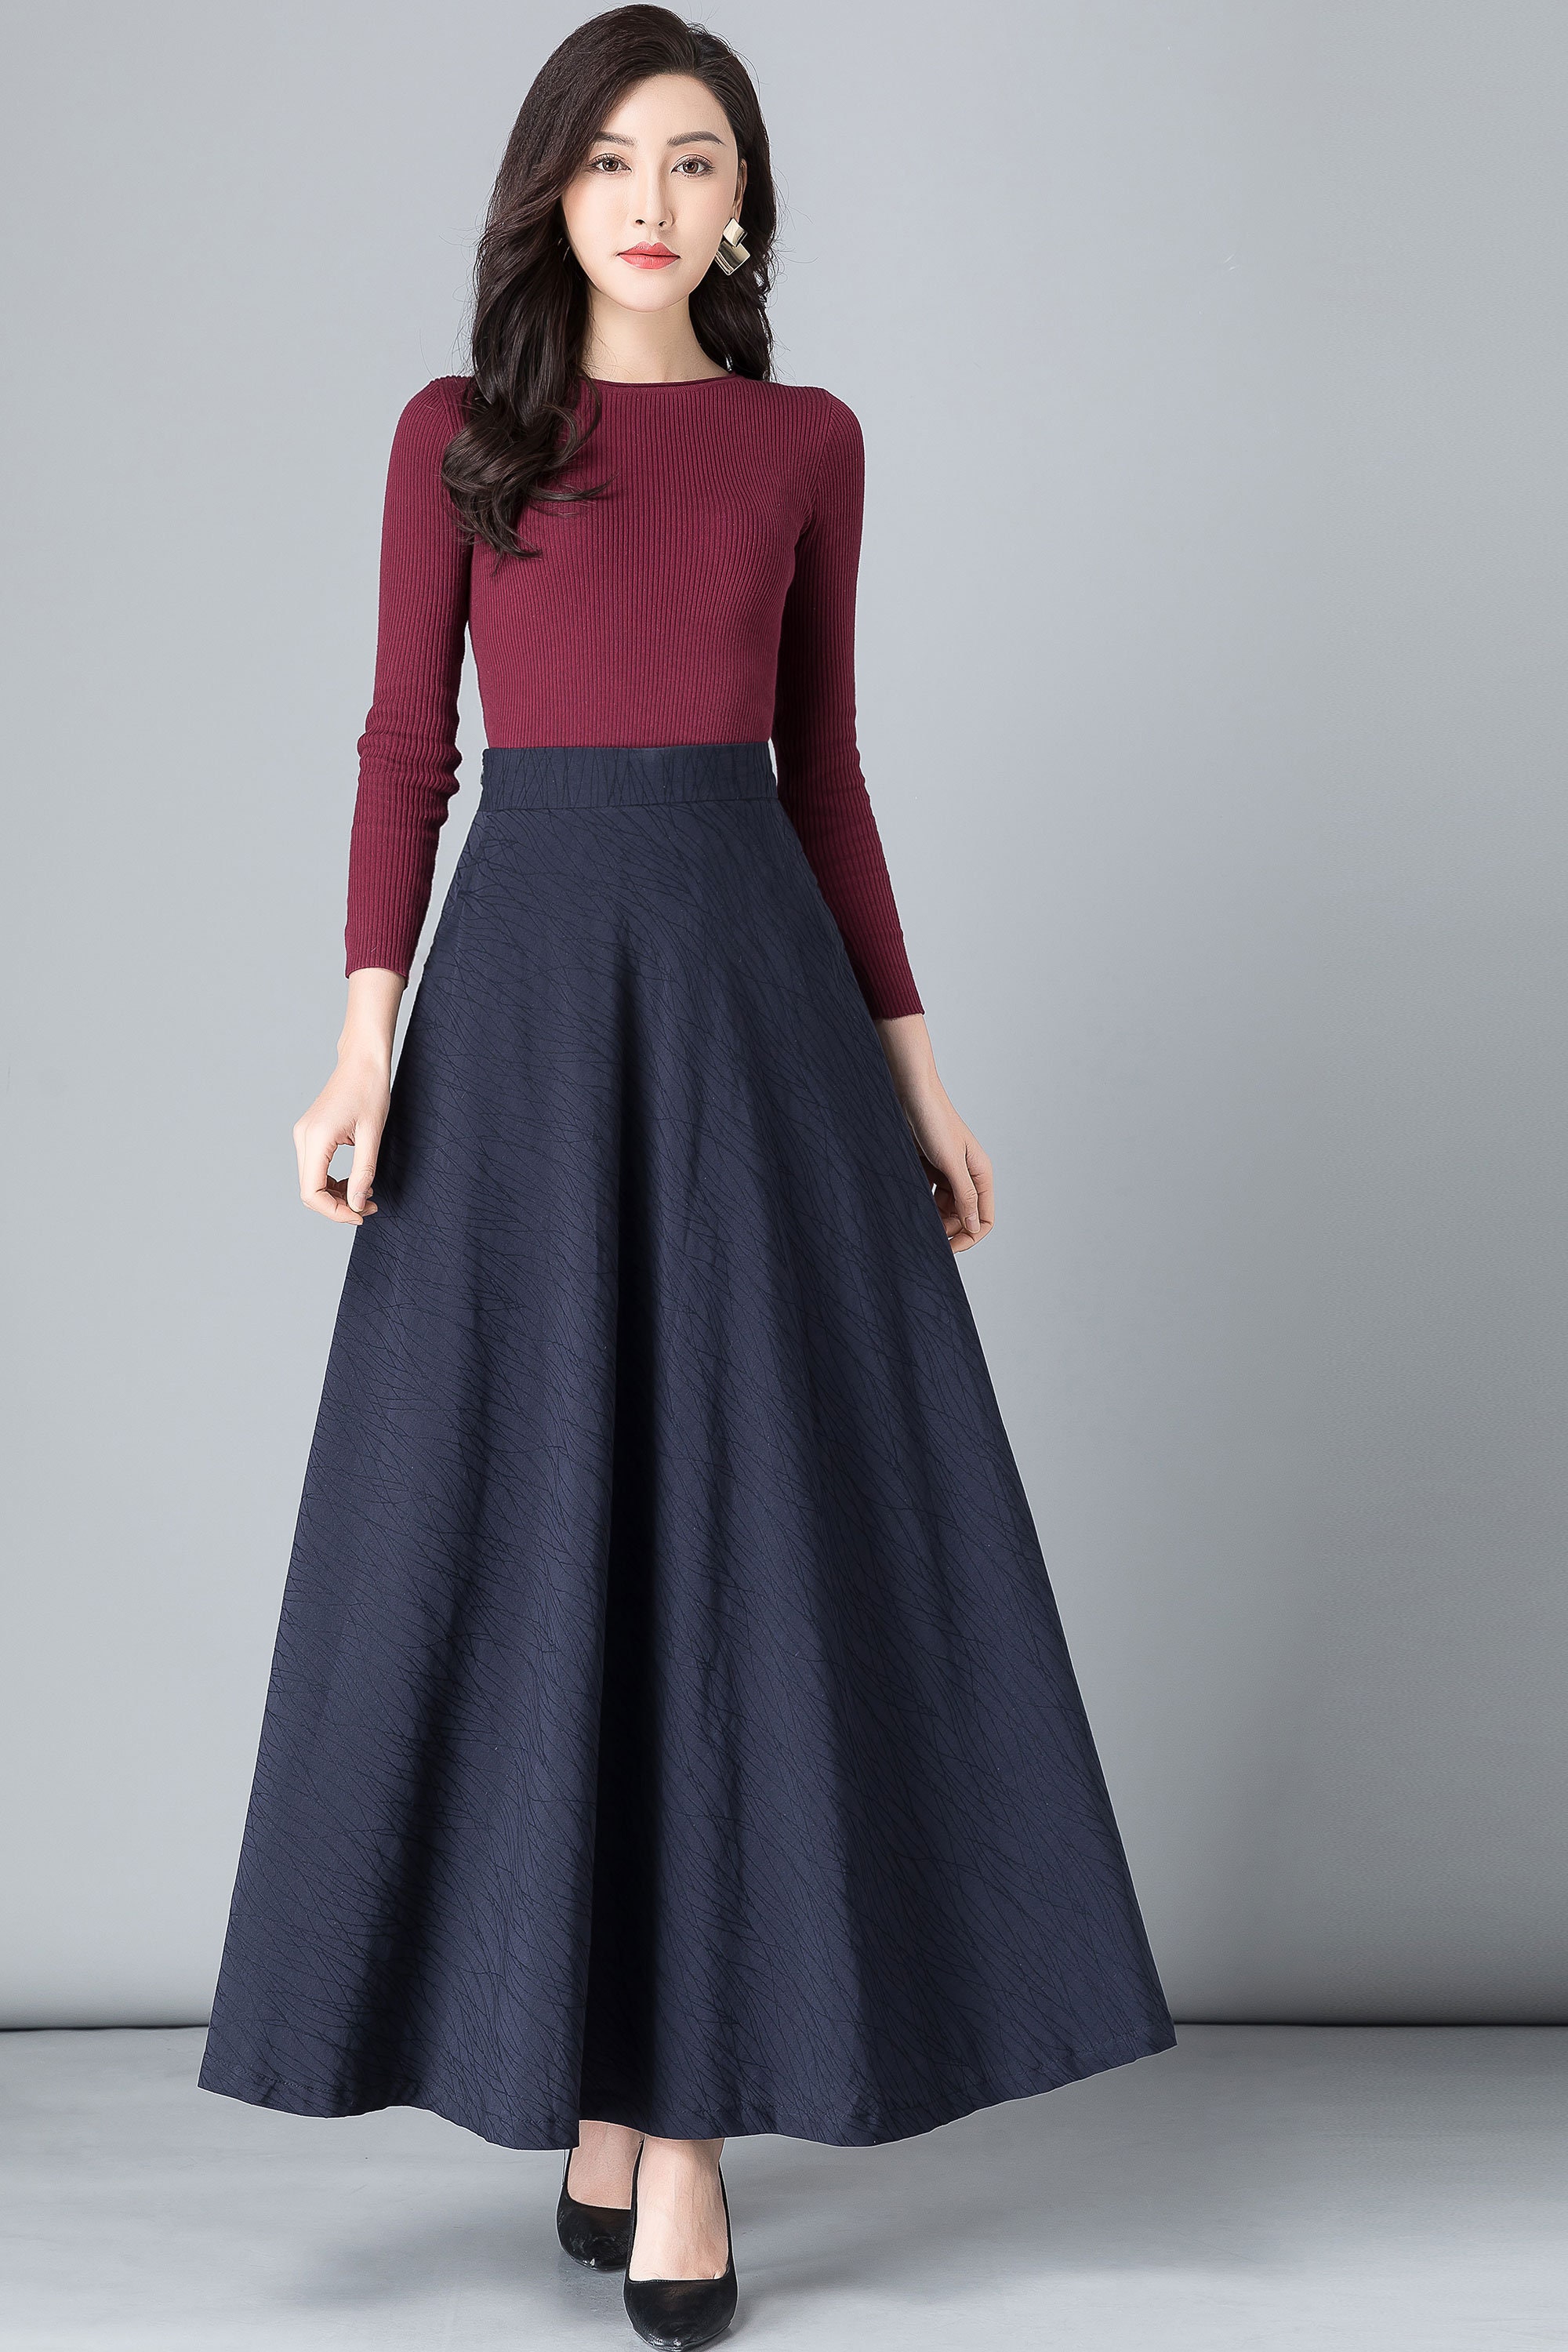 Blue skirt Maxi cotton Linen skirt Elastic waist Linen | Etsy